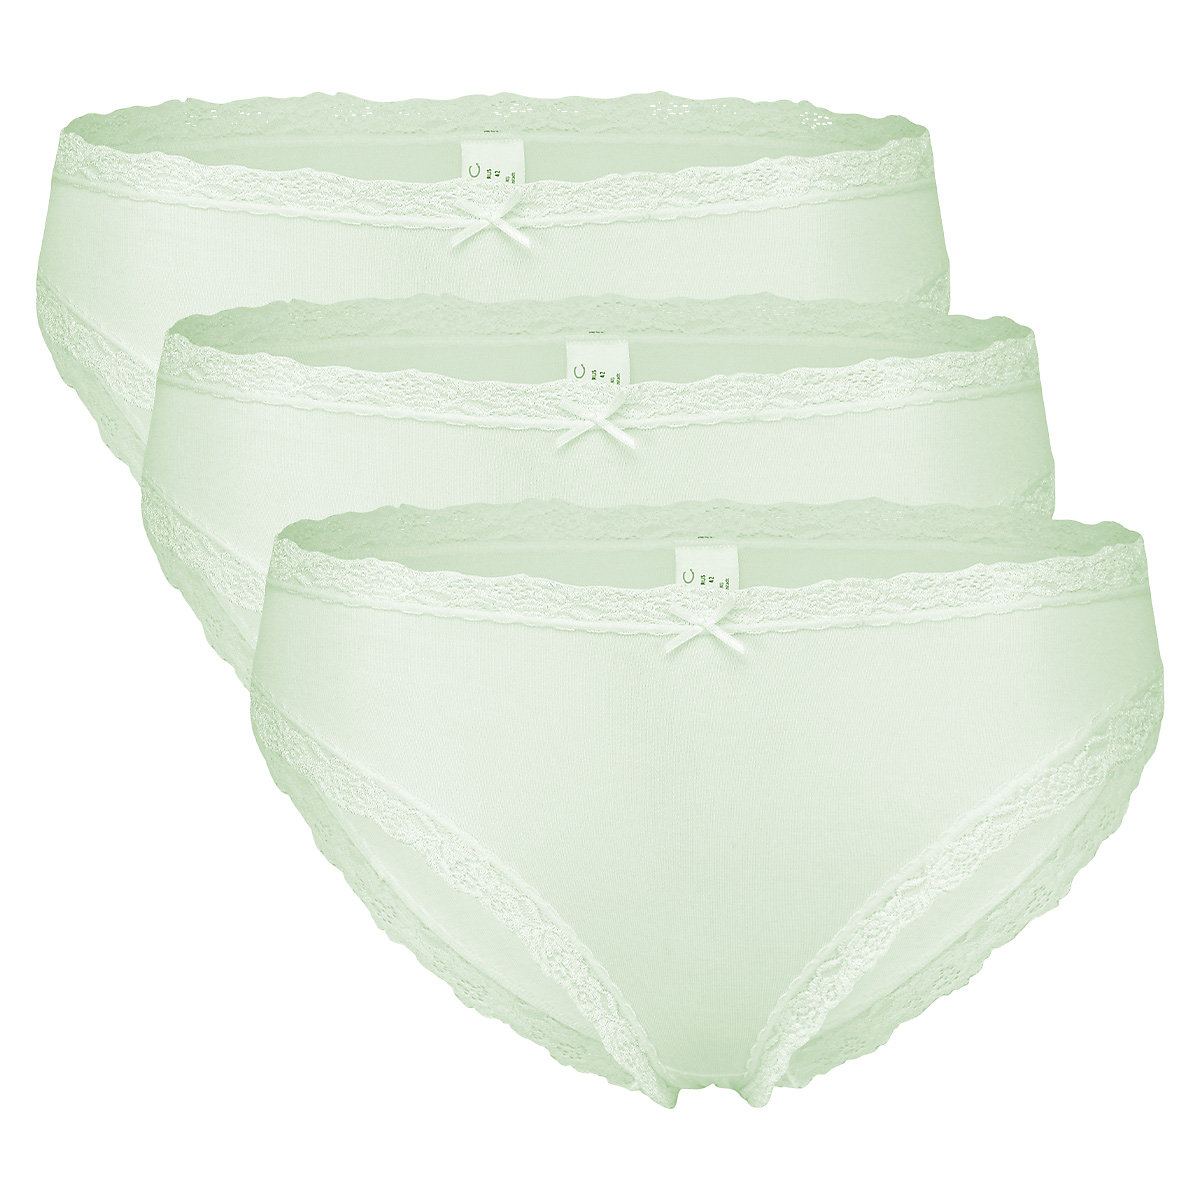 Nina von C. Jazzpants 3er Pack Basic Panties grün